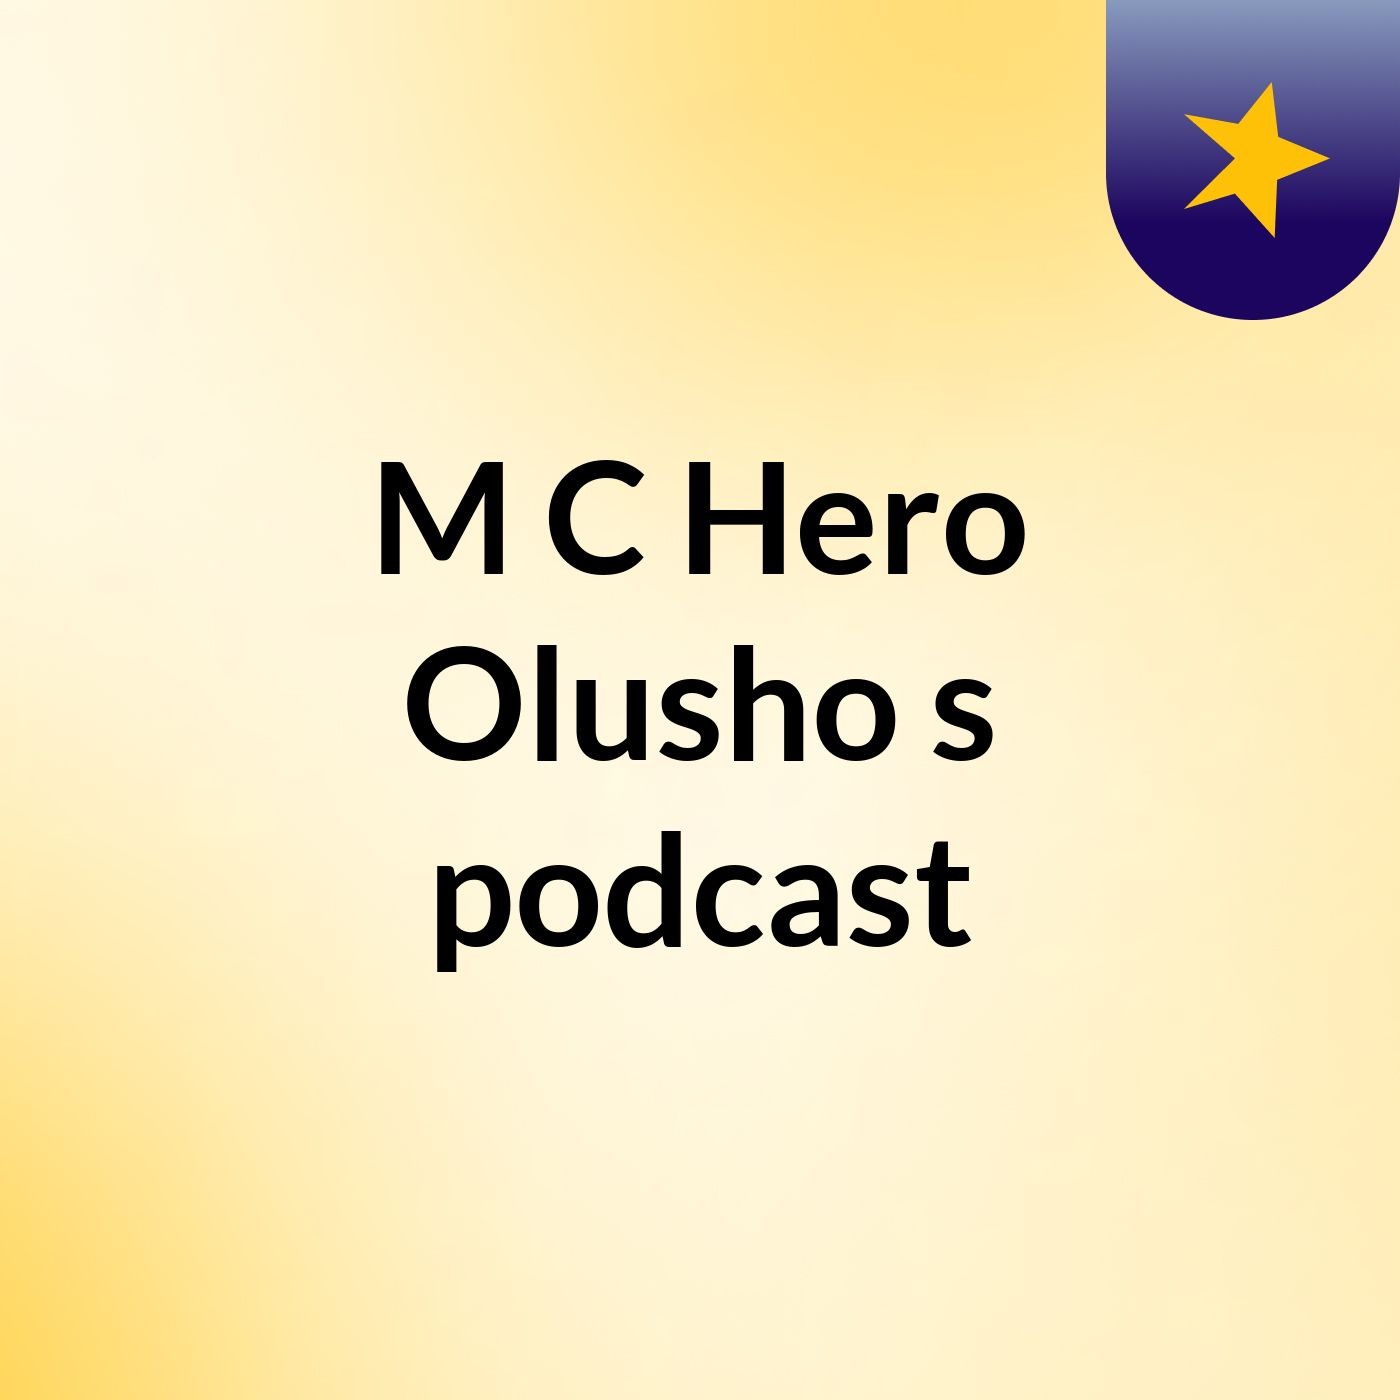 M C Hero Olusho's podcast